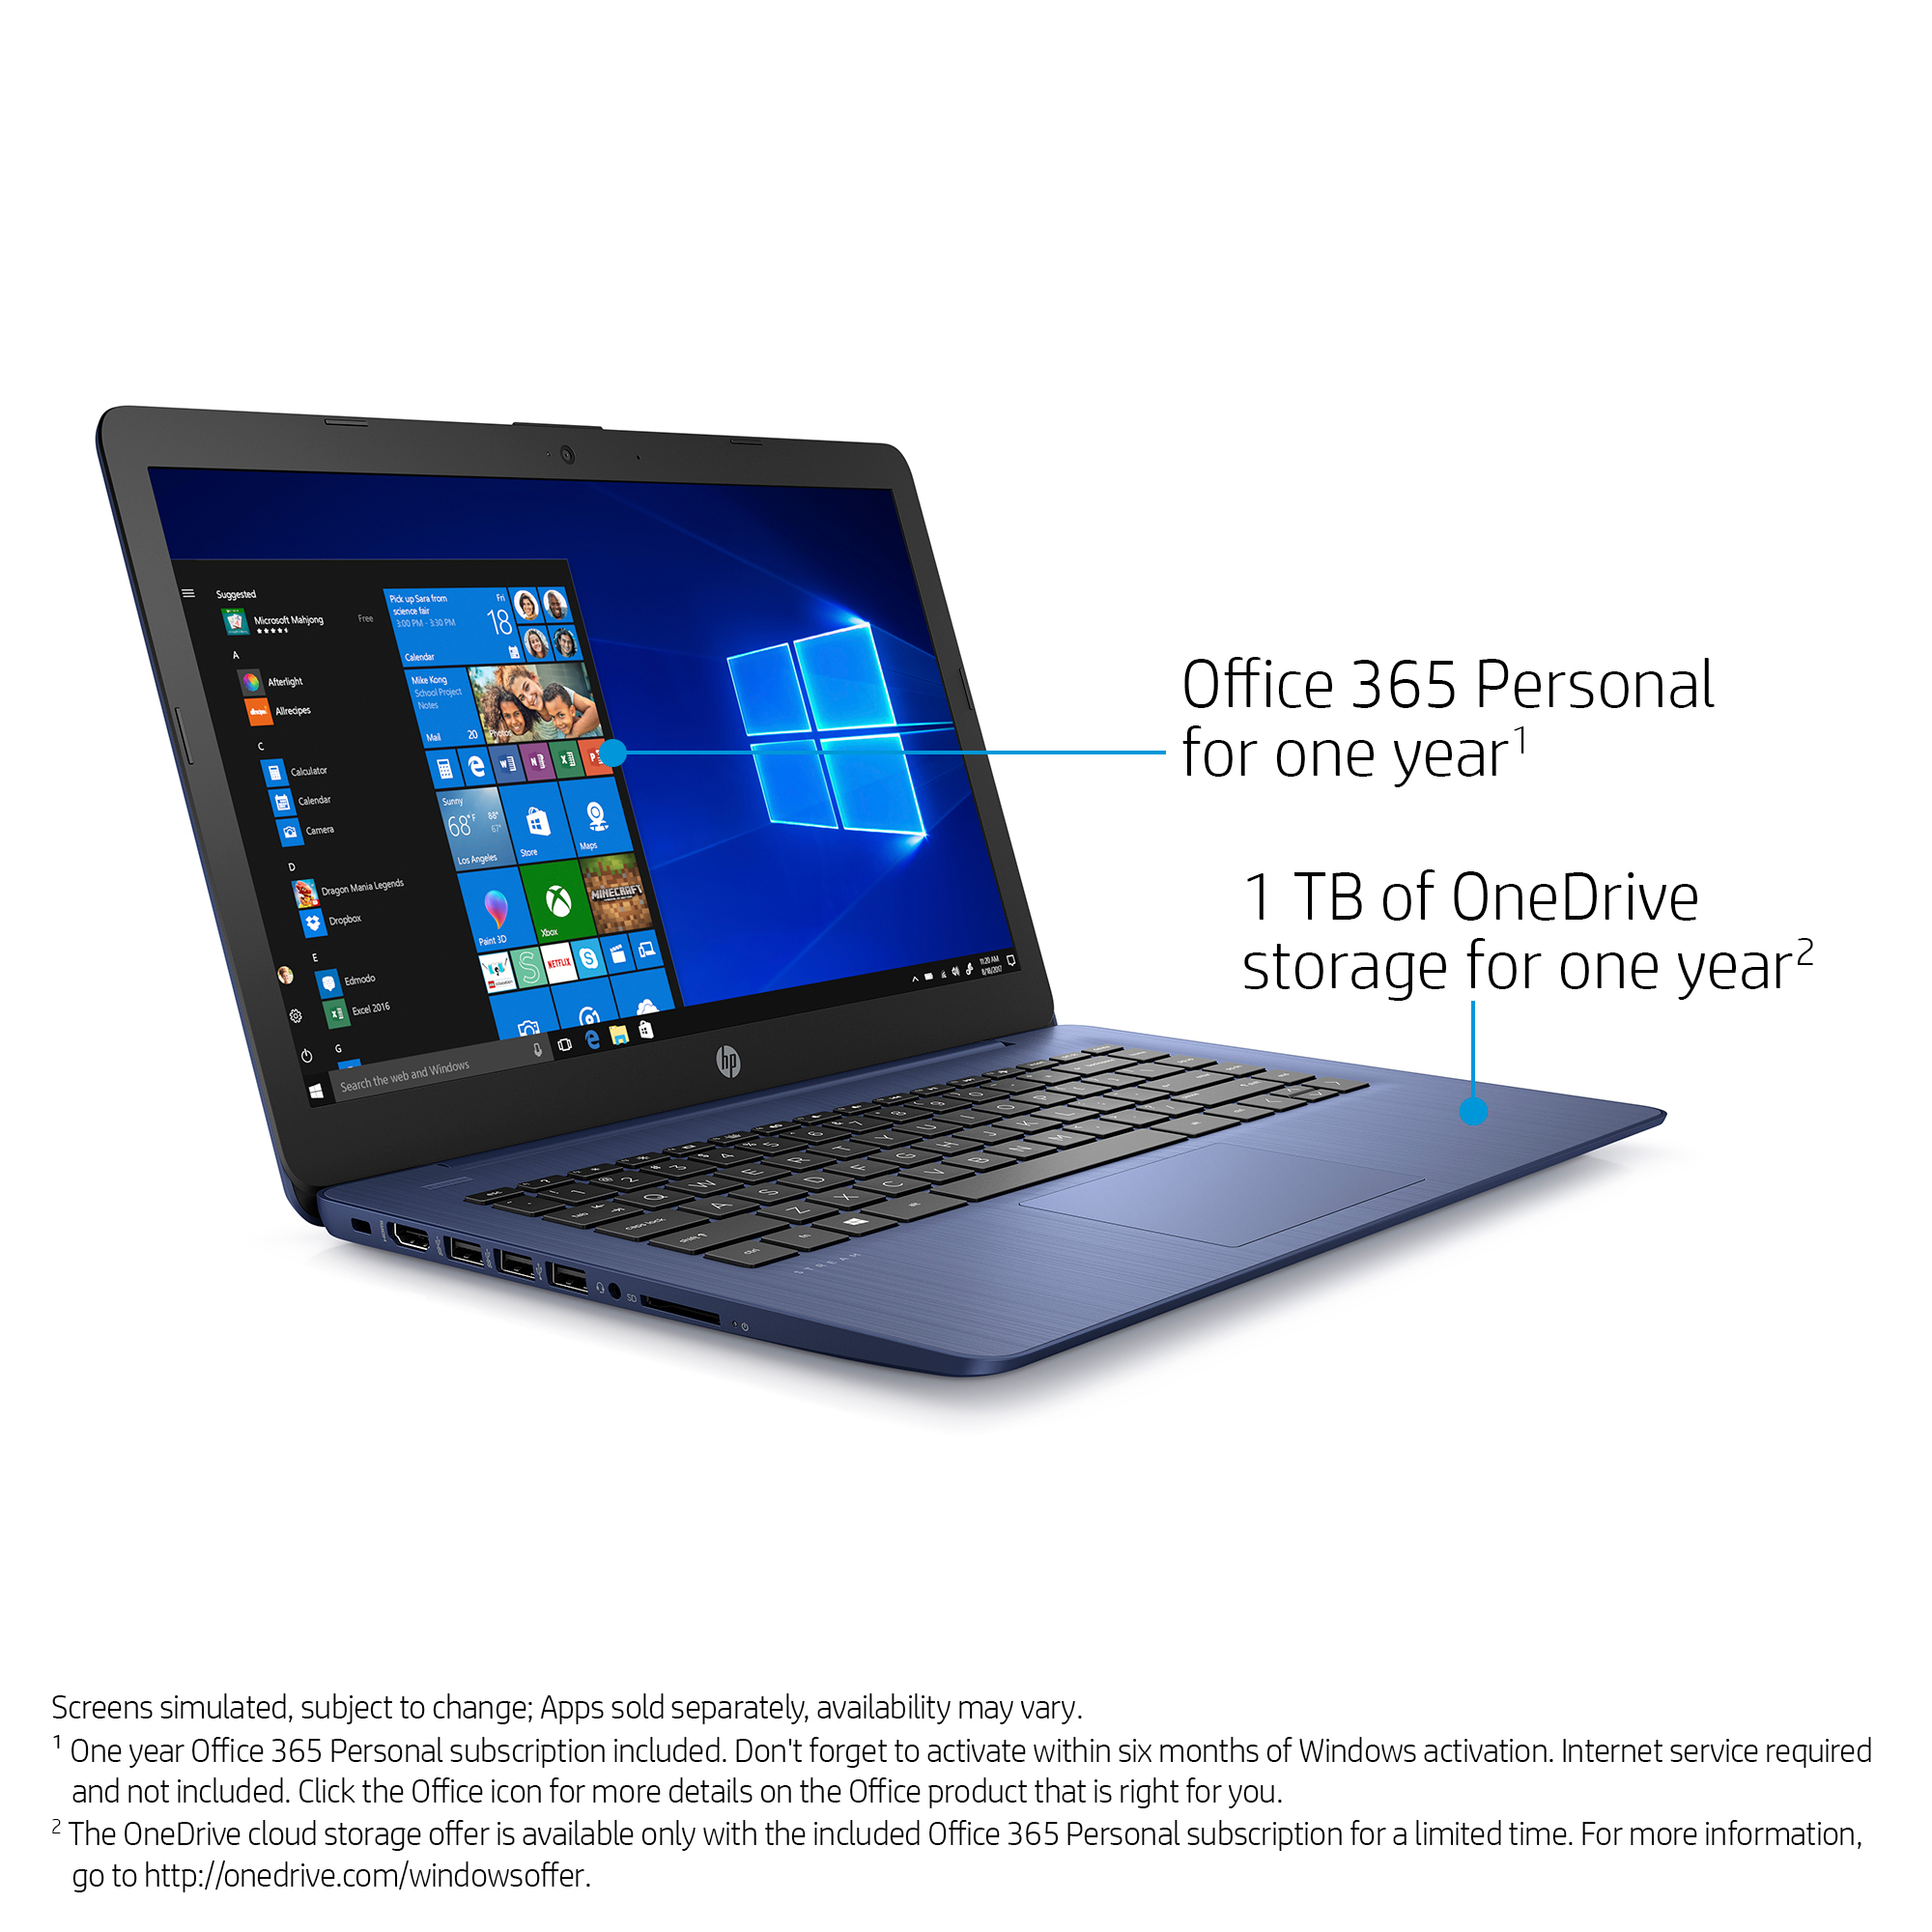 HP 14" PC Laptop, Intel Celeron N4000, 4GB RAM, 64GB HD, Windows 10S with 1 year Office 365, Blue, 14-cb171wm - image 3 of 12